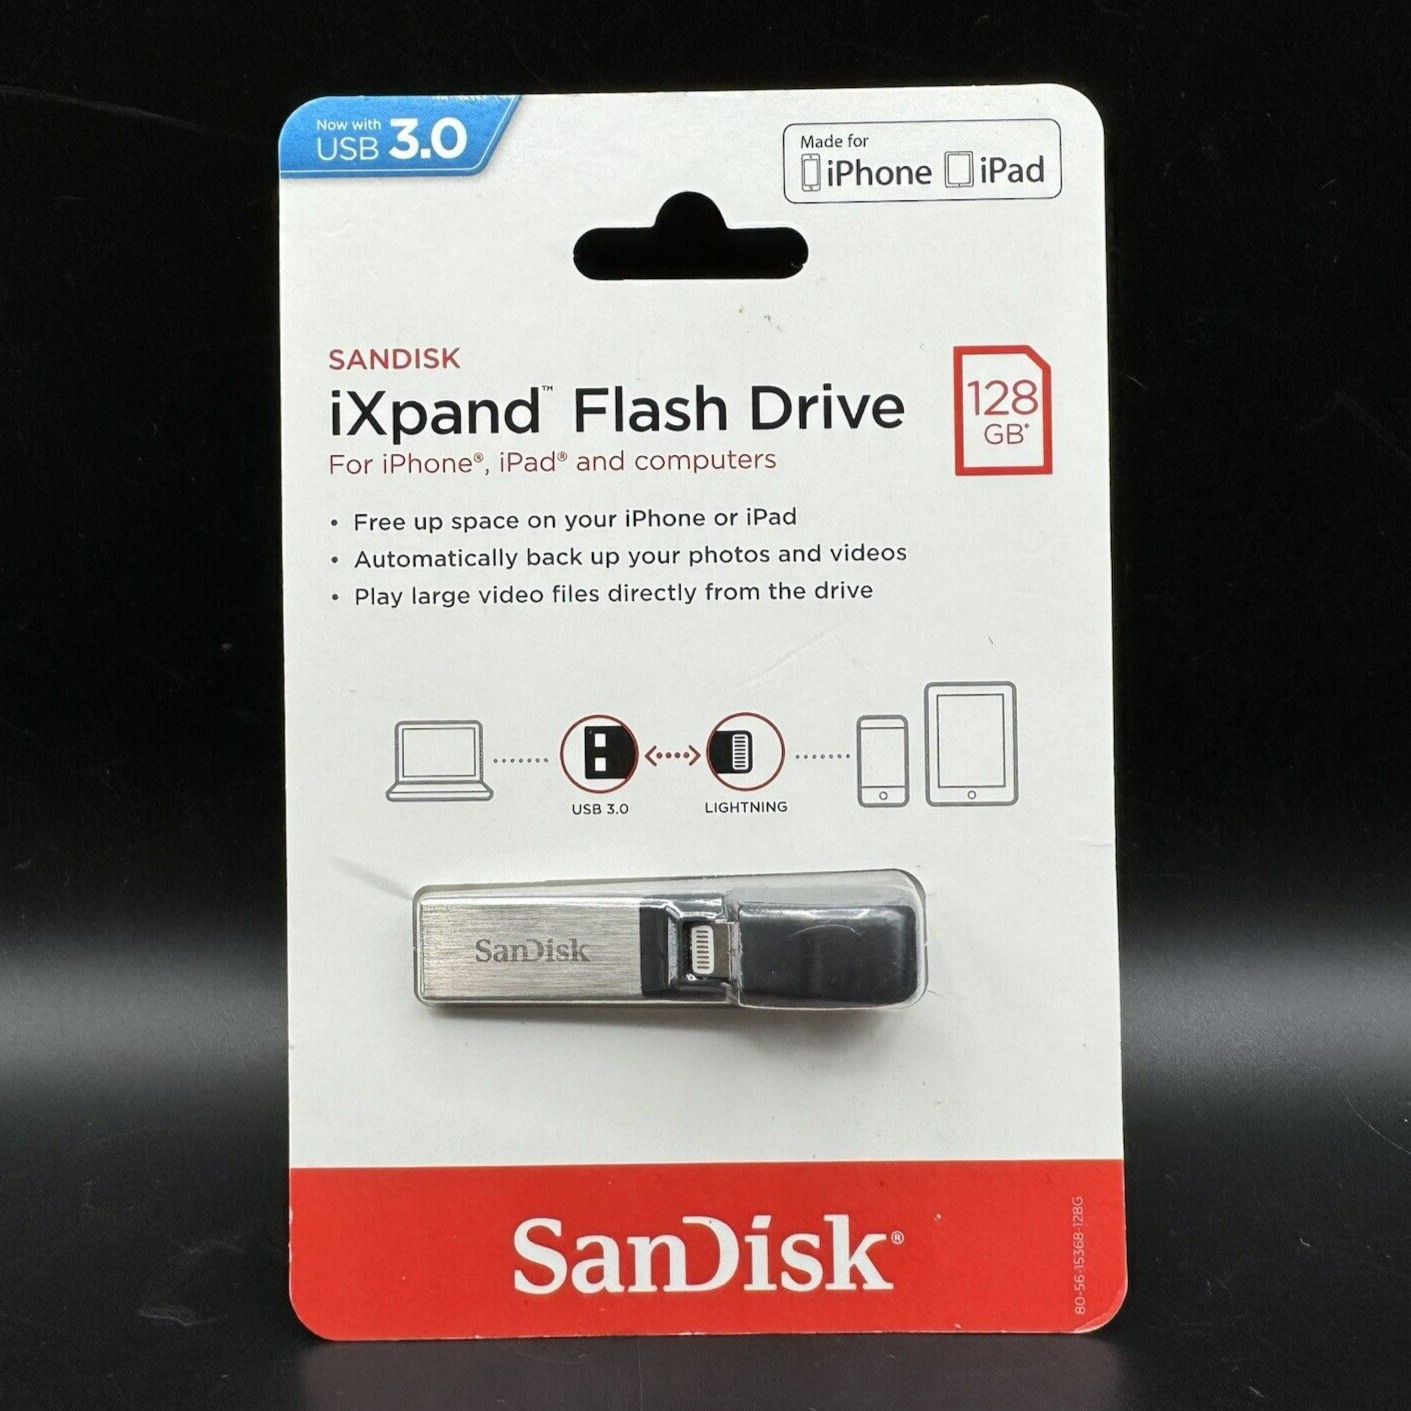 SANDISK iXpand Flash Drive Iphone iPad Computers 128GB USB 3.0 Lightning - NEW